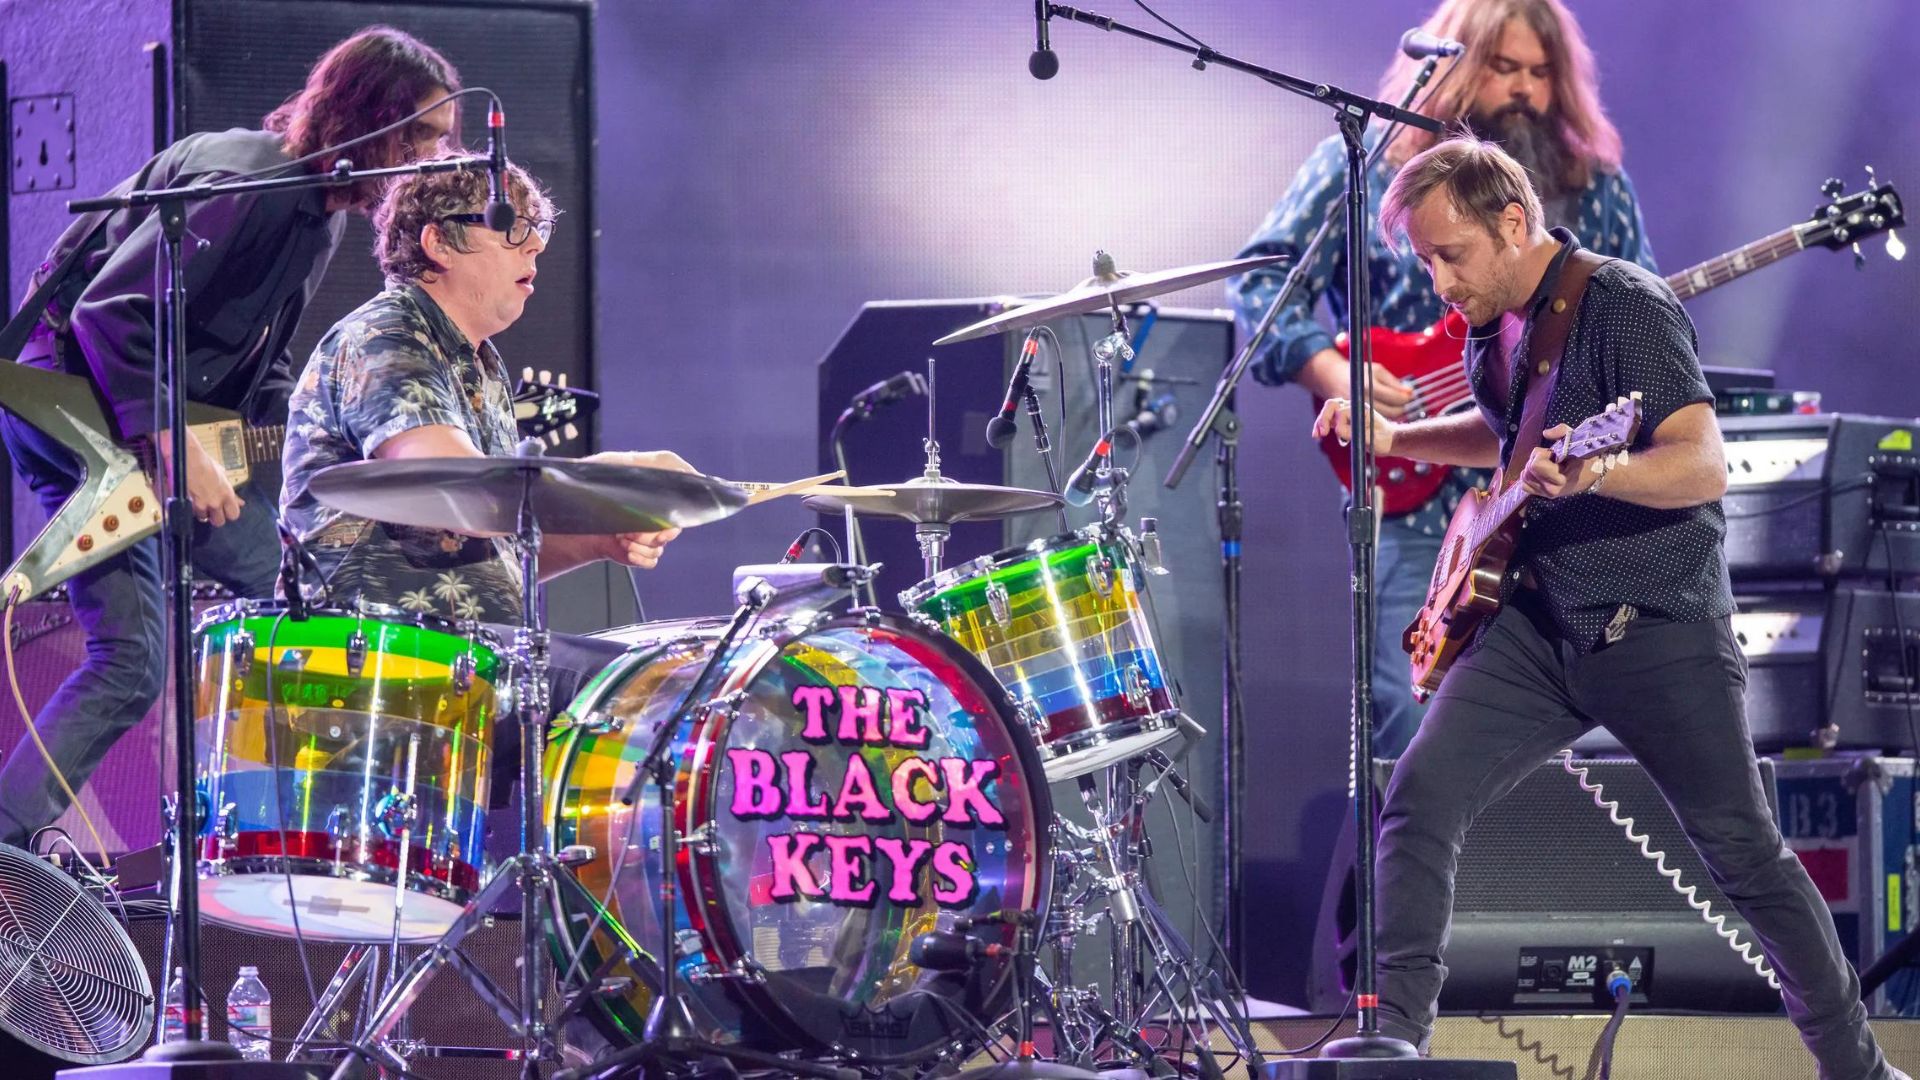 The Black Keys will perform at Evolution Festival in 2023.